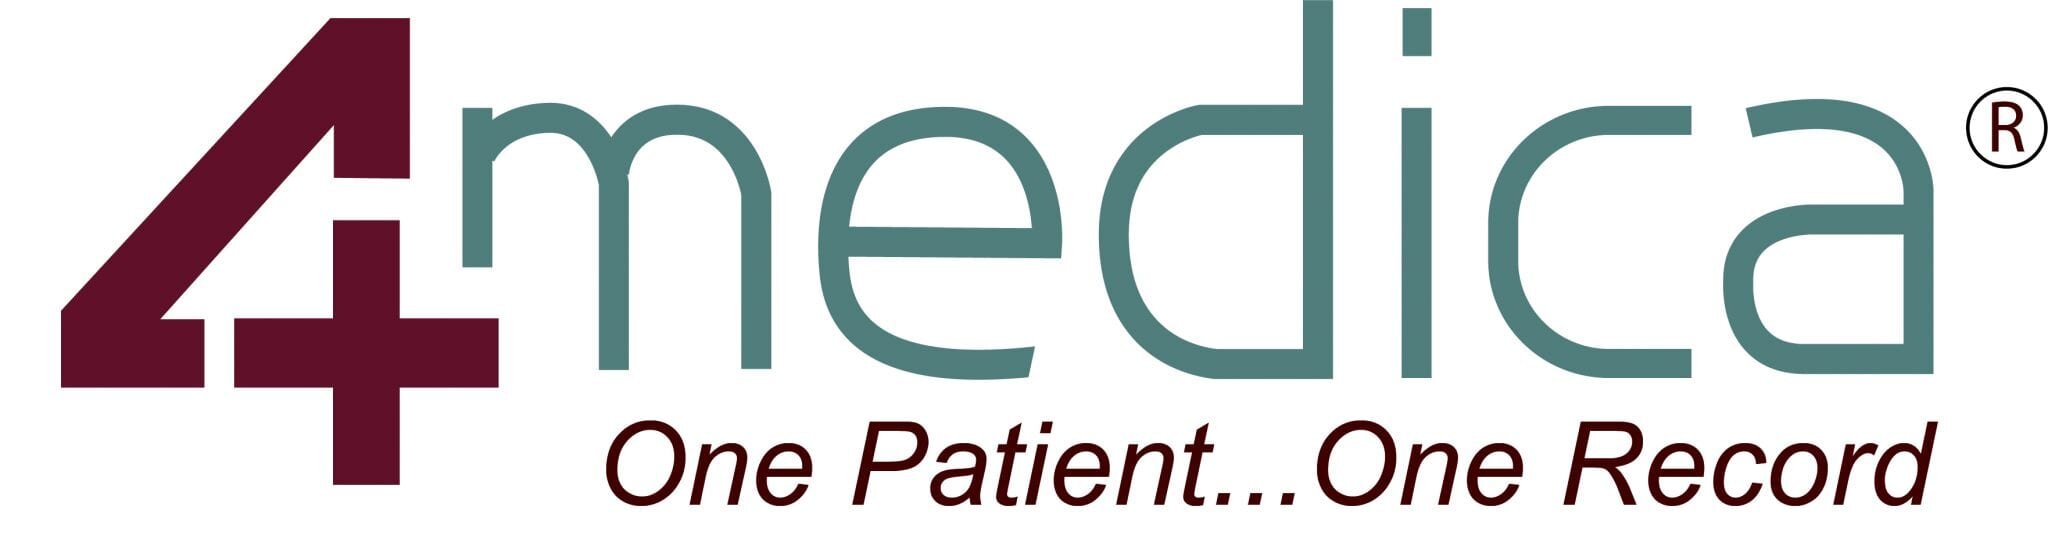 4medica-Logo_New-Tagline_One-Patient-One-Record_050518.jpg